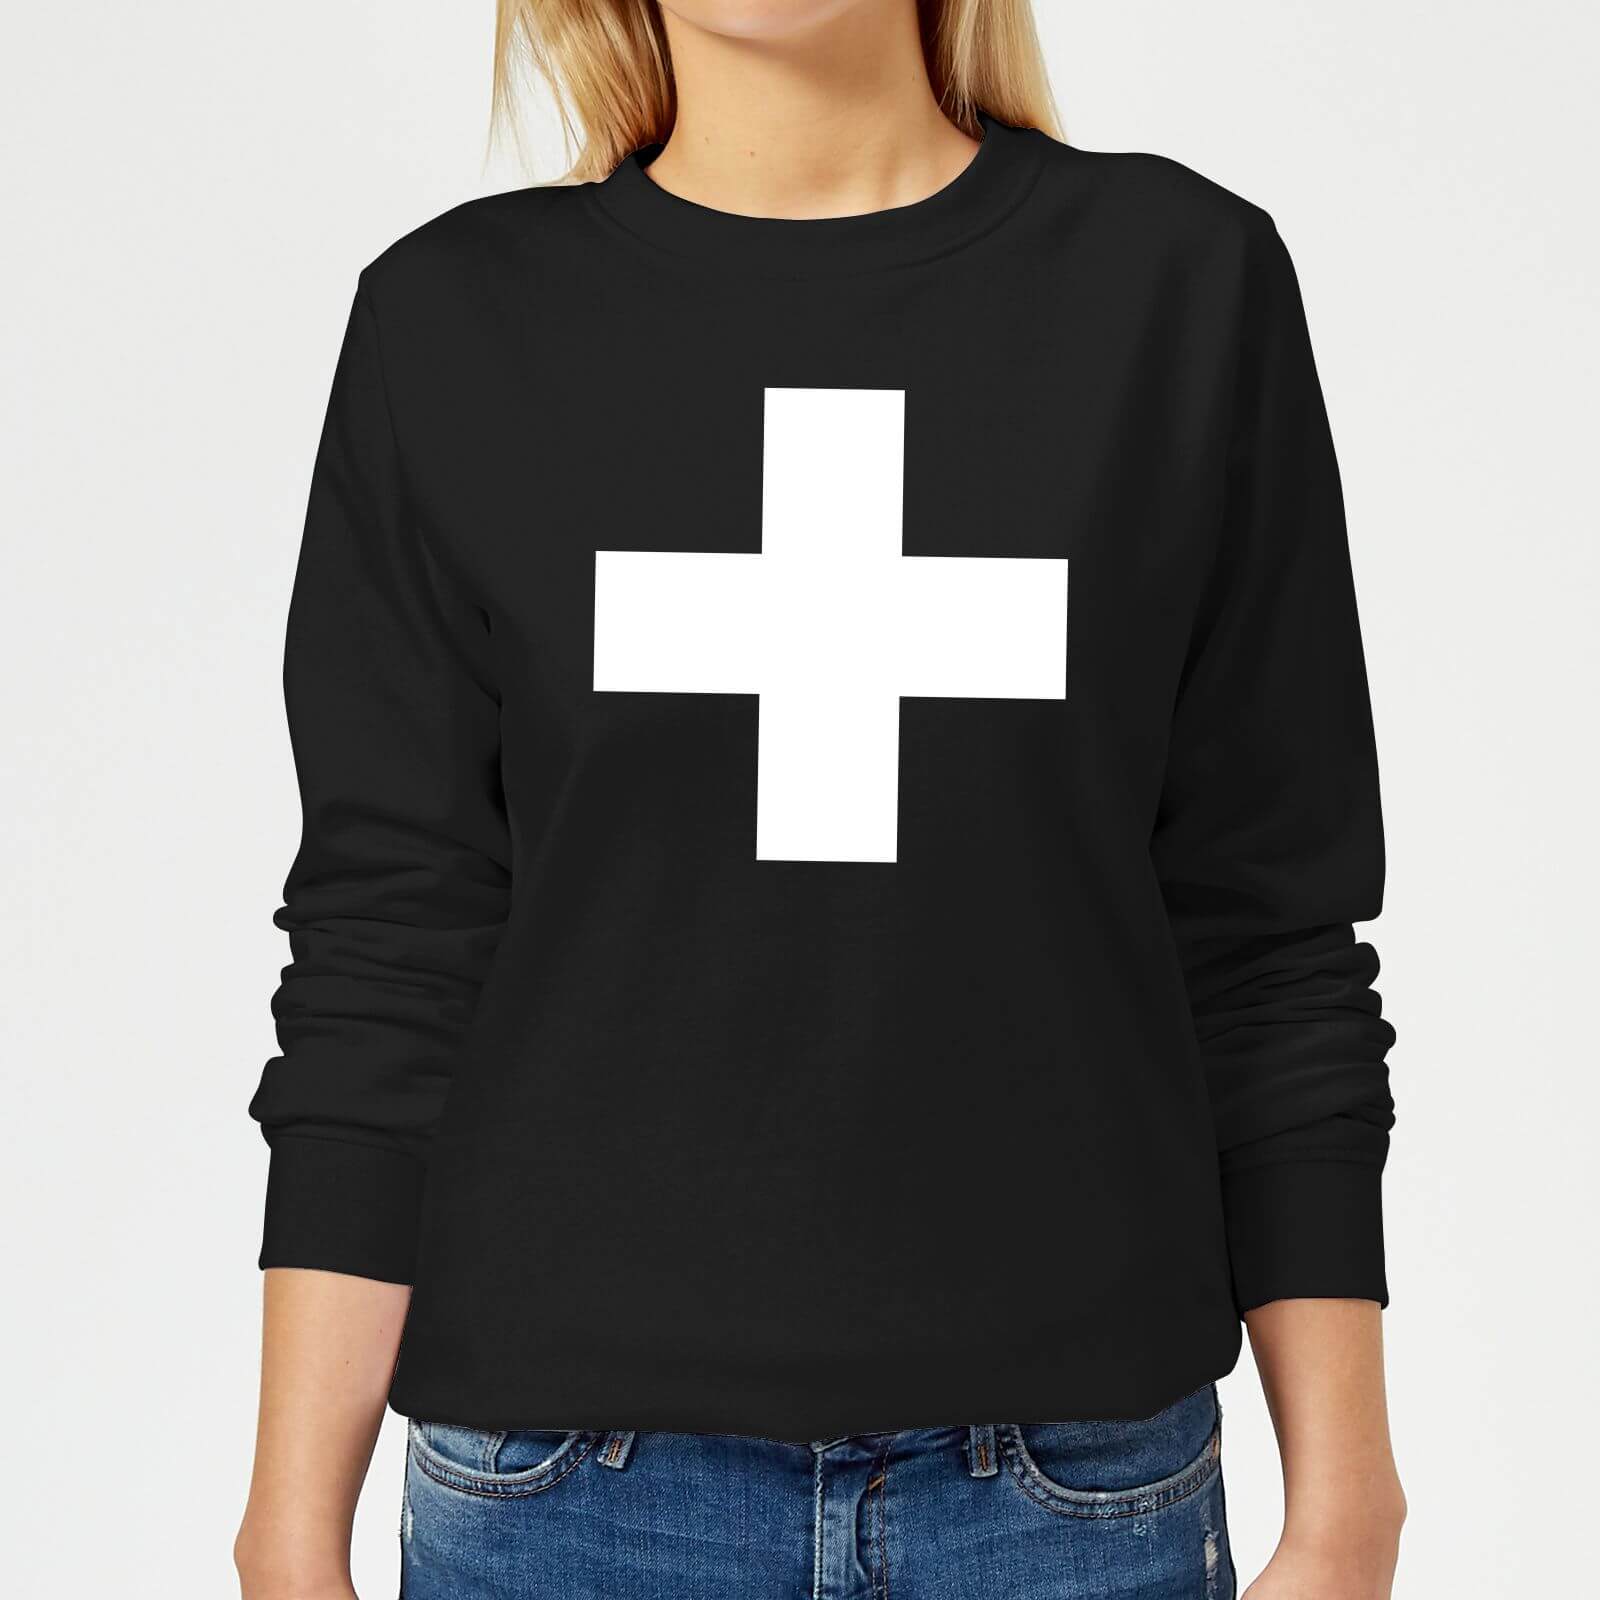 The Motivated Type Swiss Cross Women's Sweatshirt - Black - XS - Black